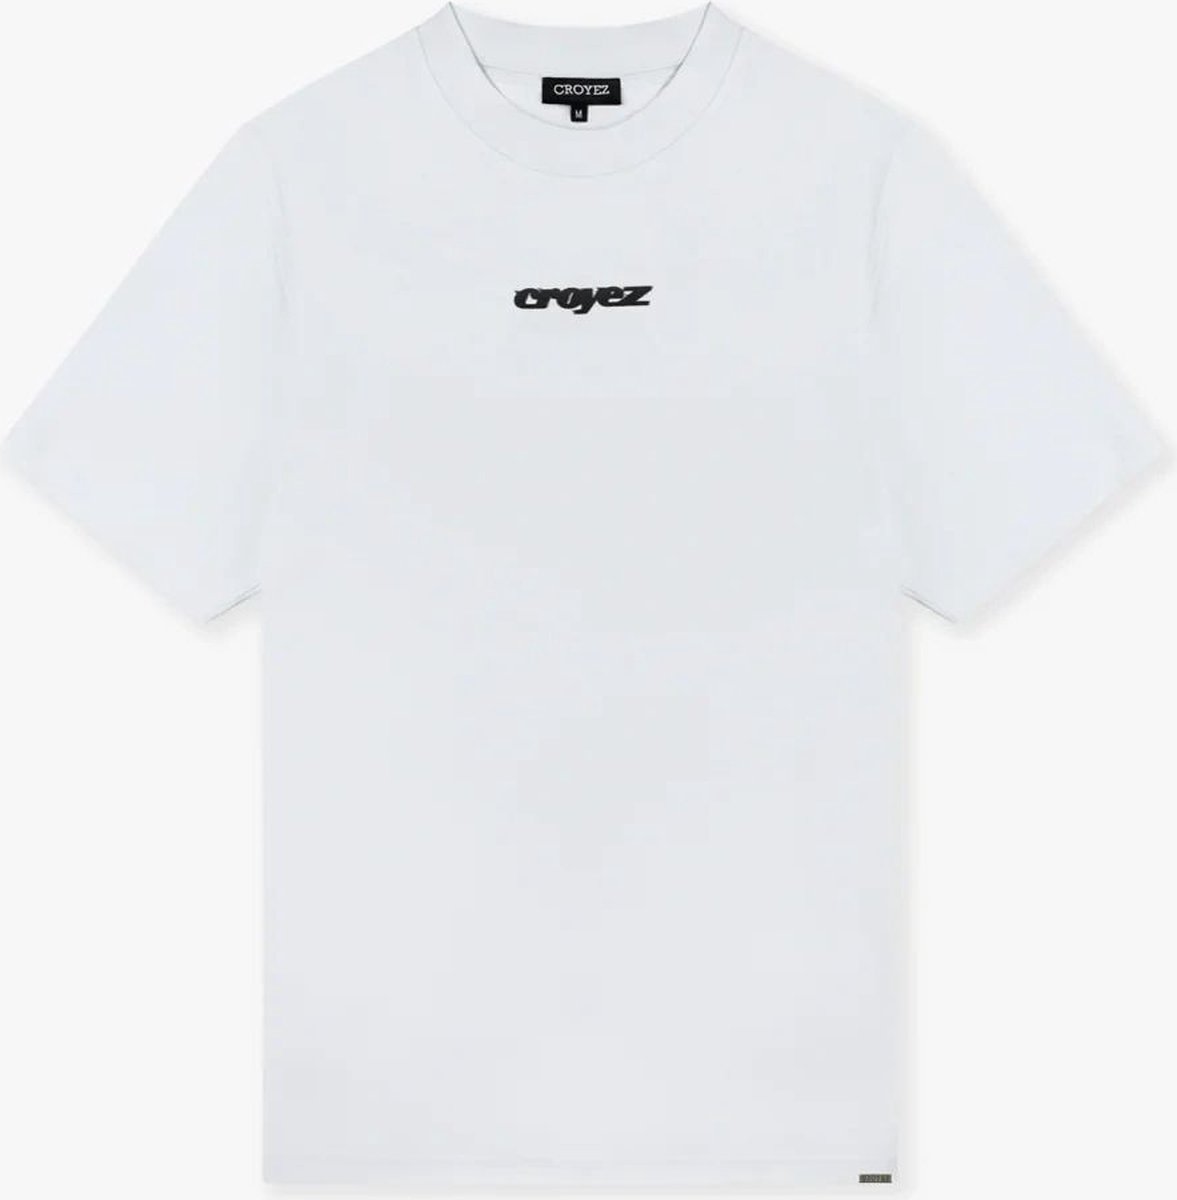 Croyez Track T-Shirt White Maat XL